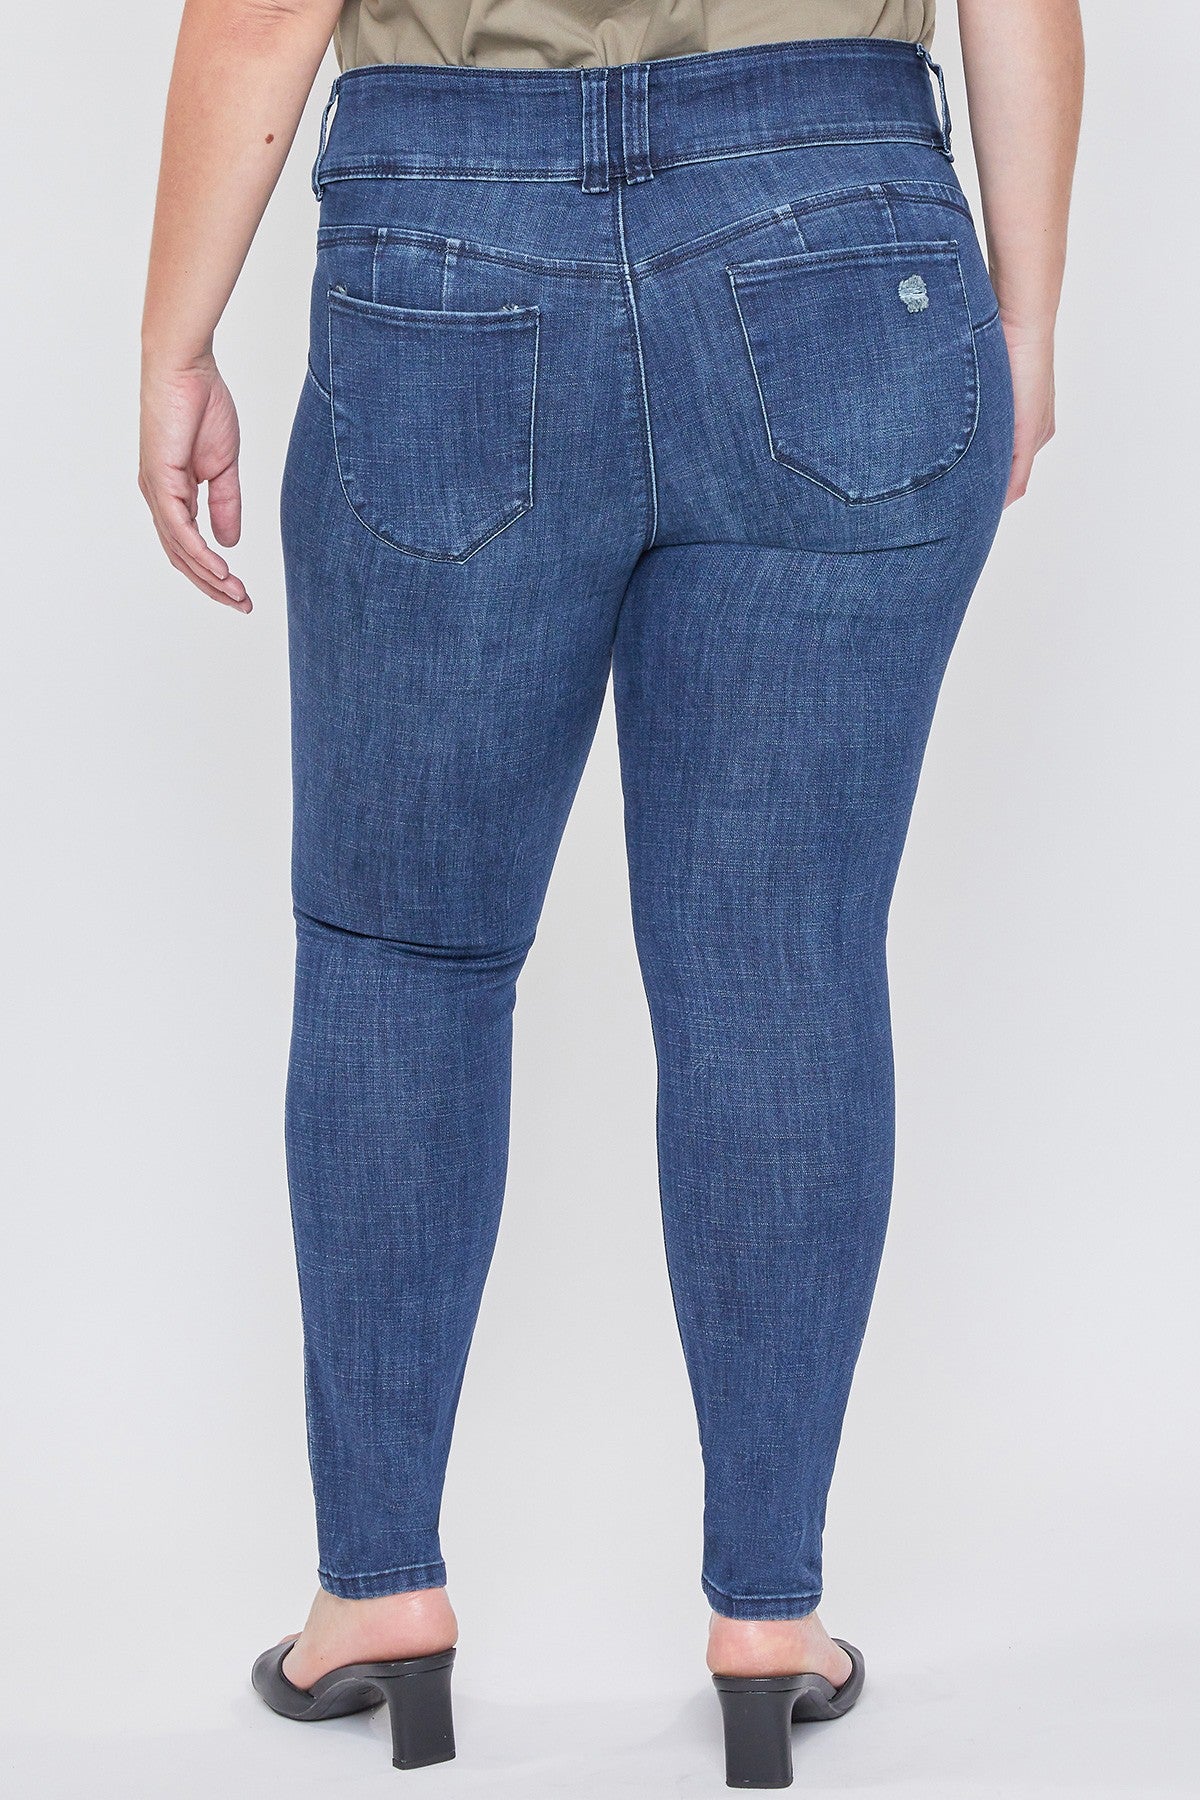 Le jean fashionlover taille moyenne/haute